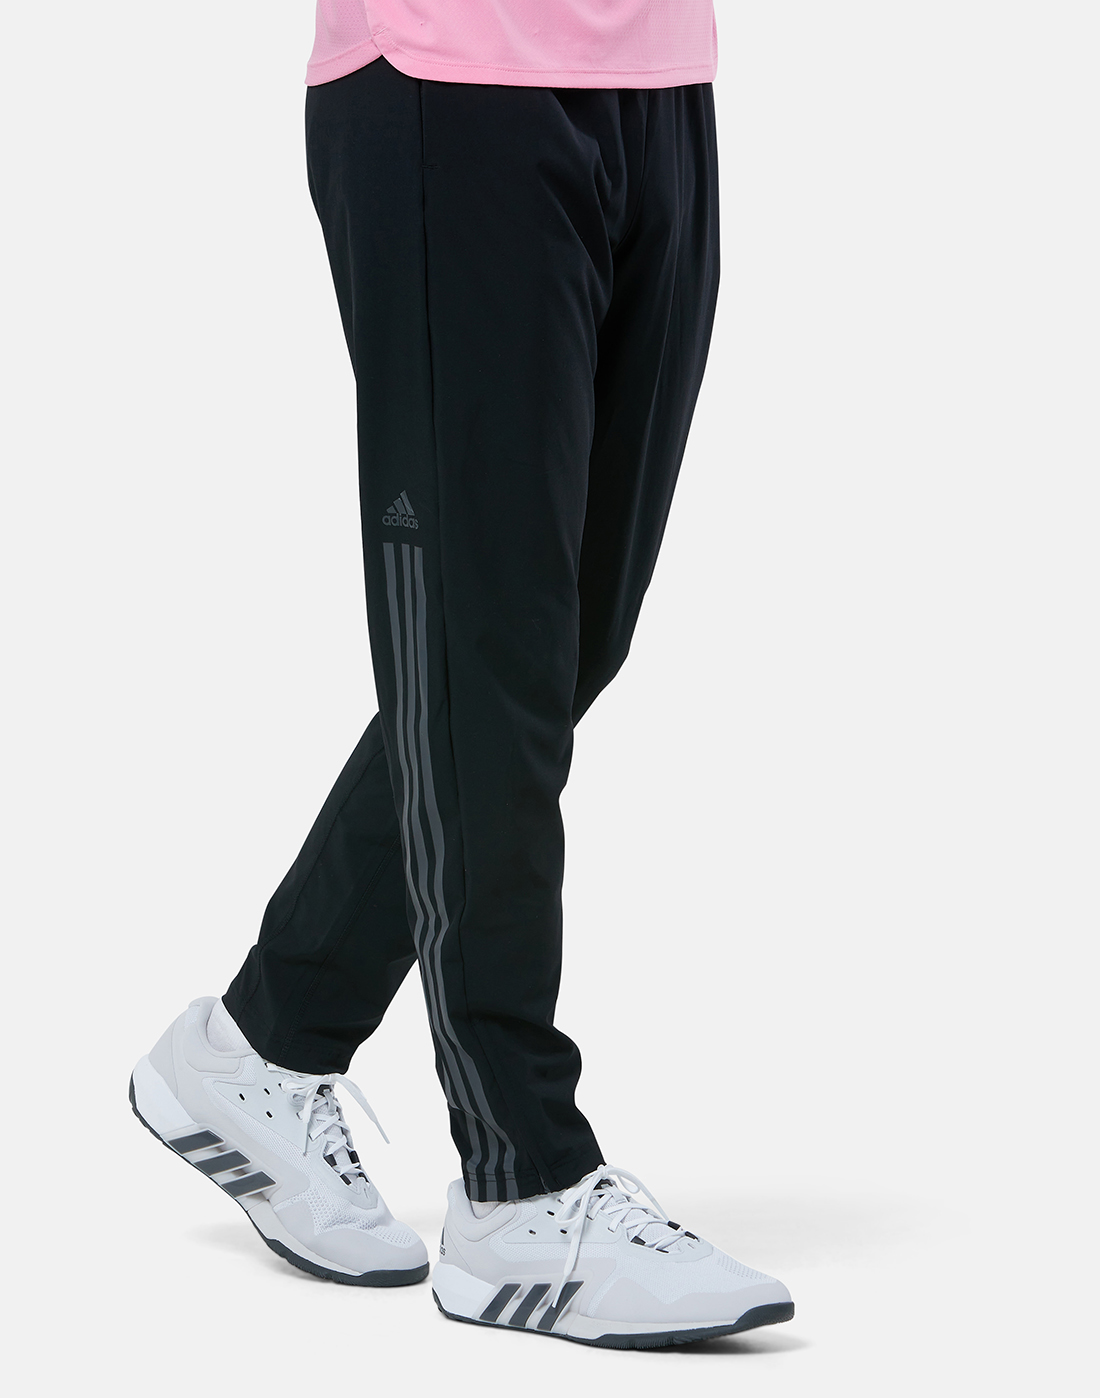 adidas Training pants 3S regular fit in black/ white